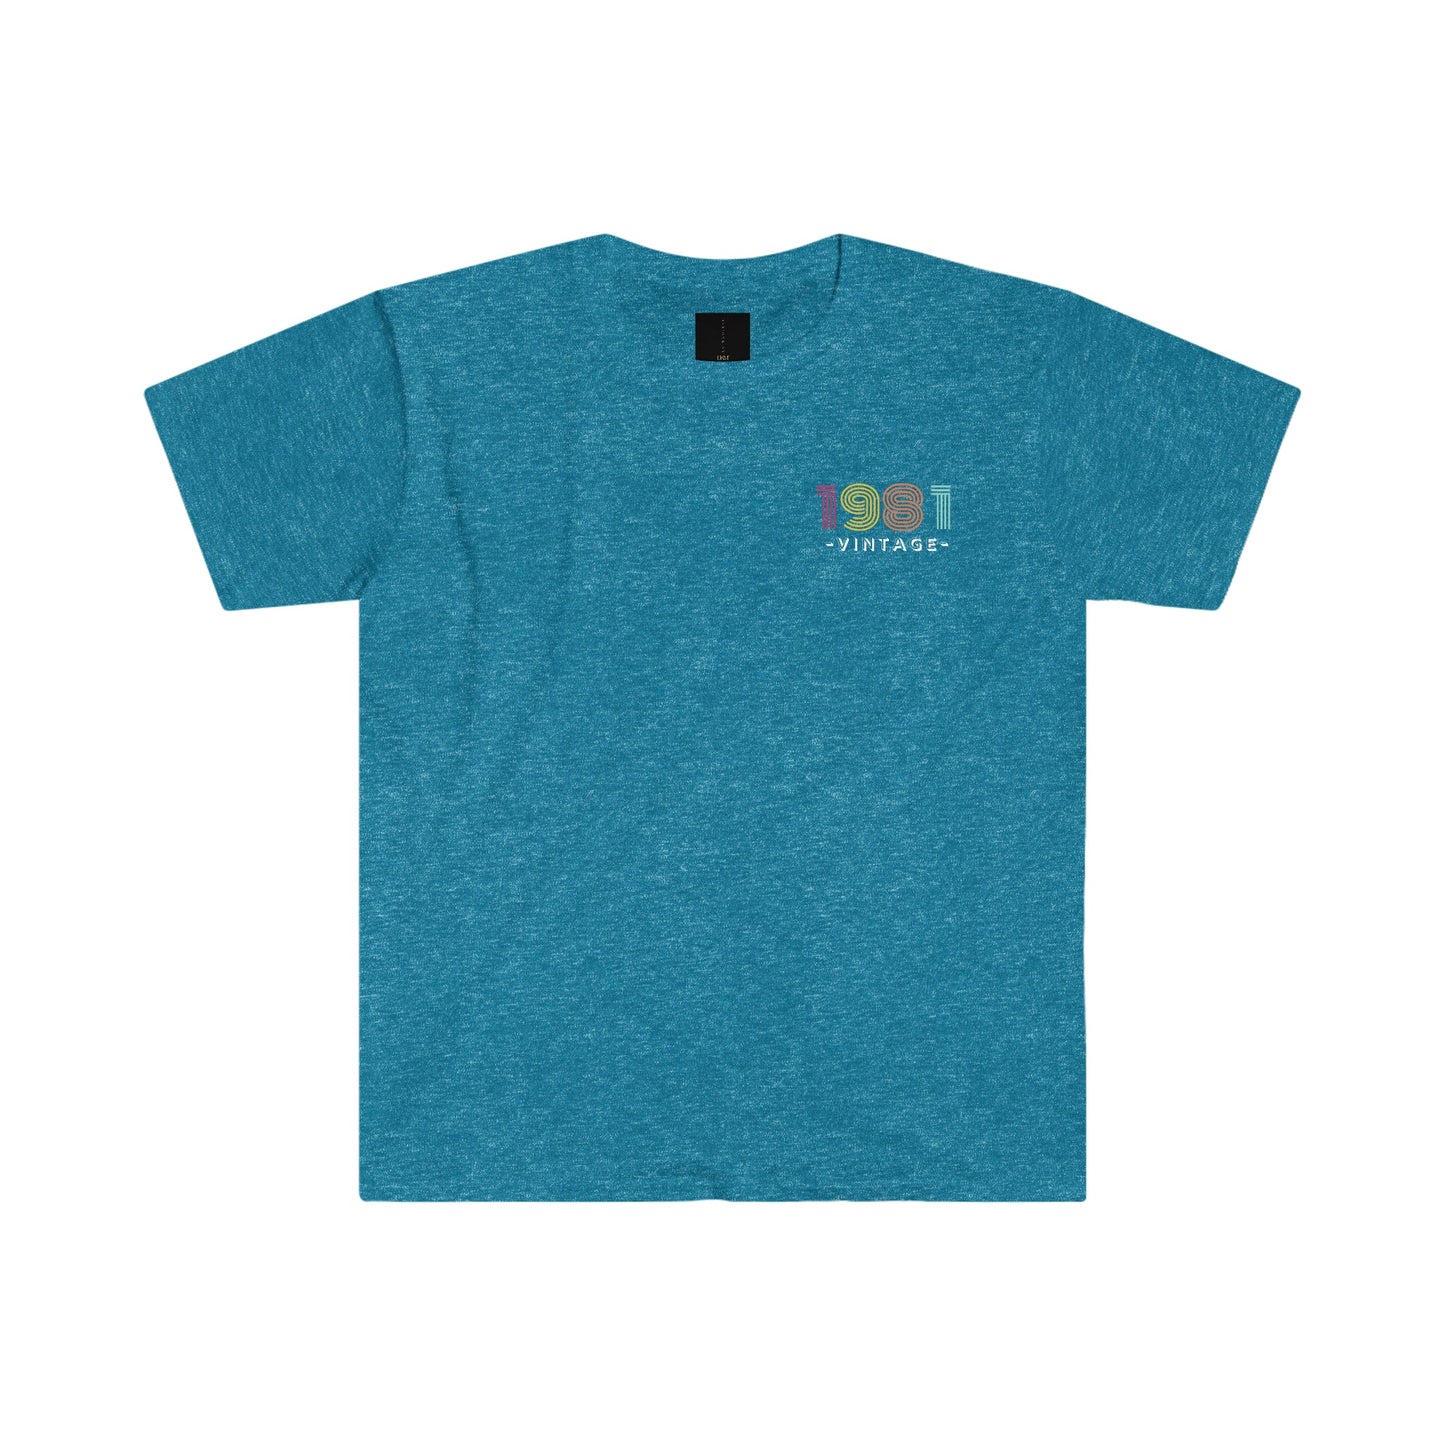 1981 Vintage, Unisex T-Shirt - Designs by DKMc